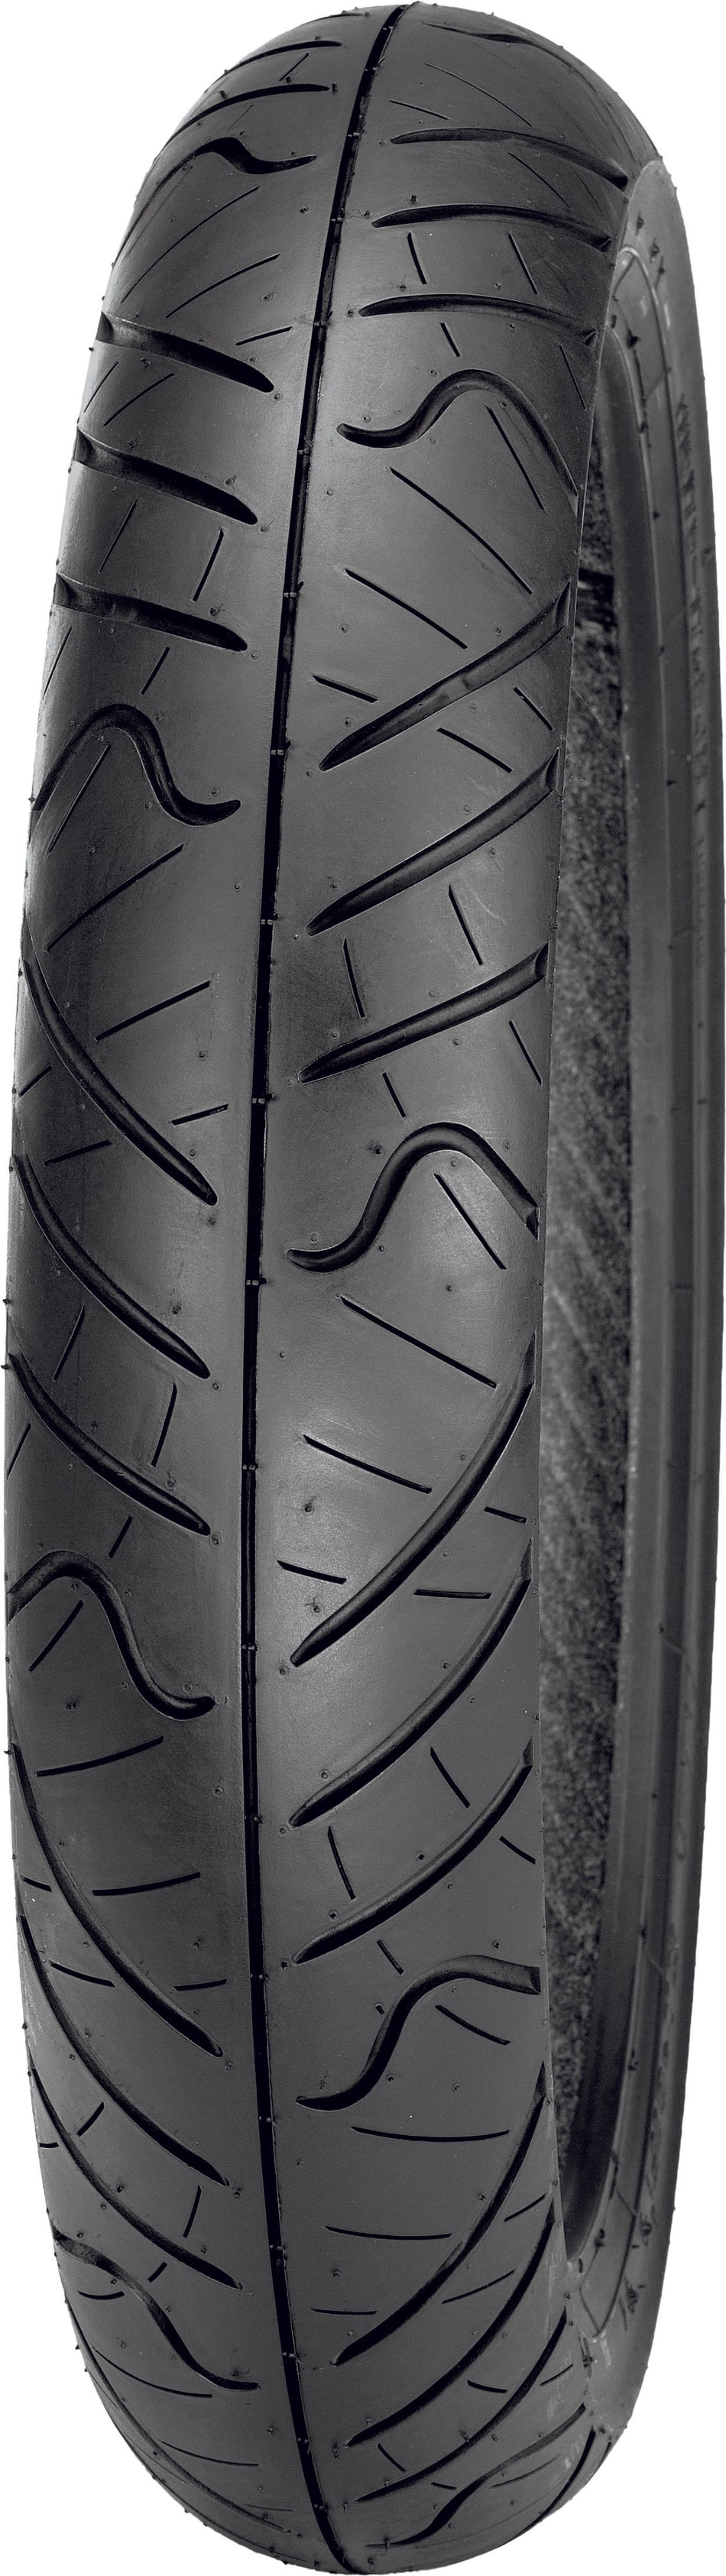 IRC Tire Rx-01 Front 110/70-17 54s Bias T10283